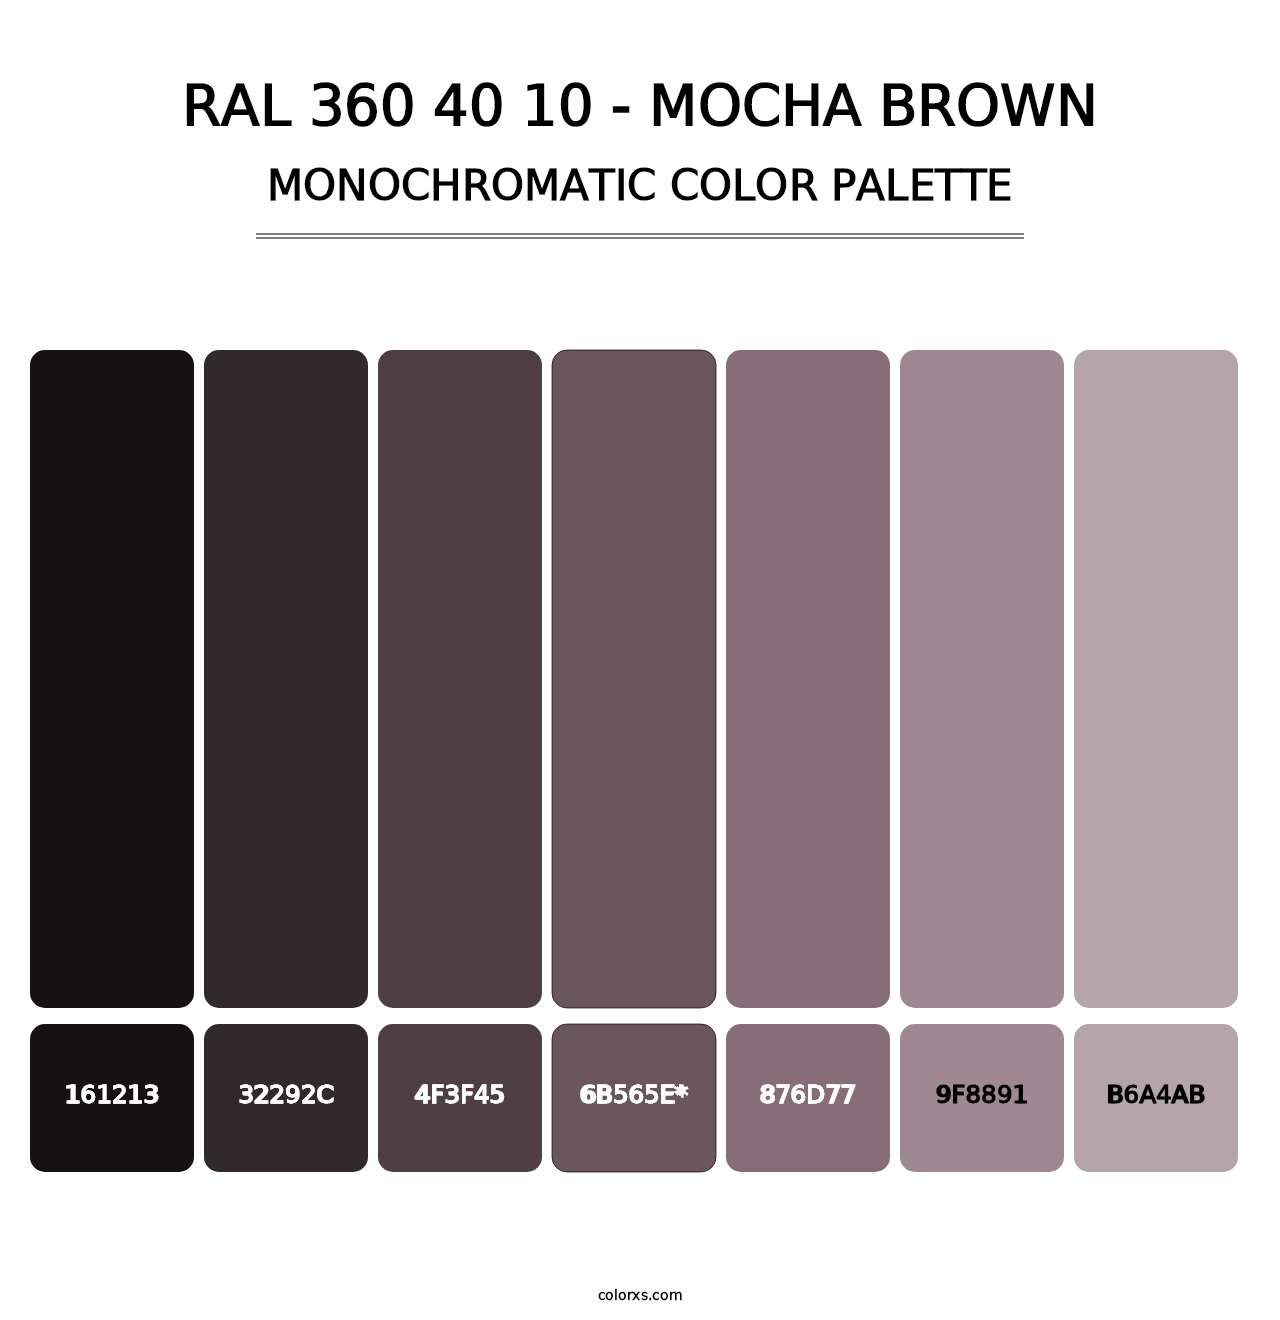 RAL 360 40 10 - Mocha Brown - Monochromatic Color Palette